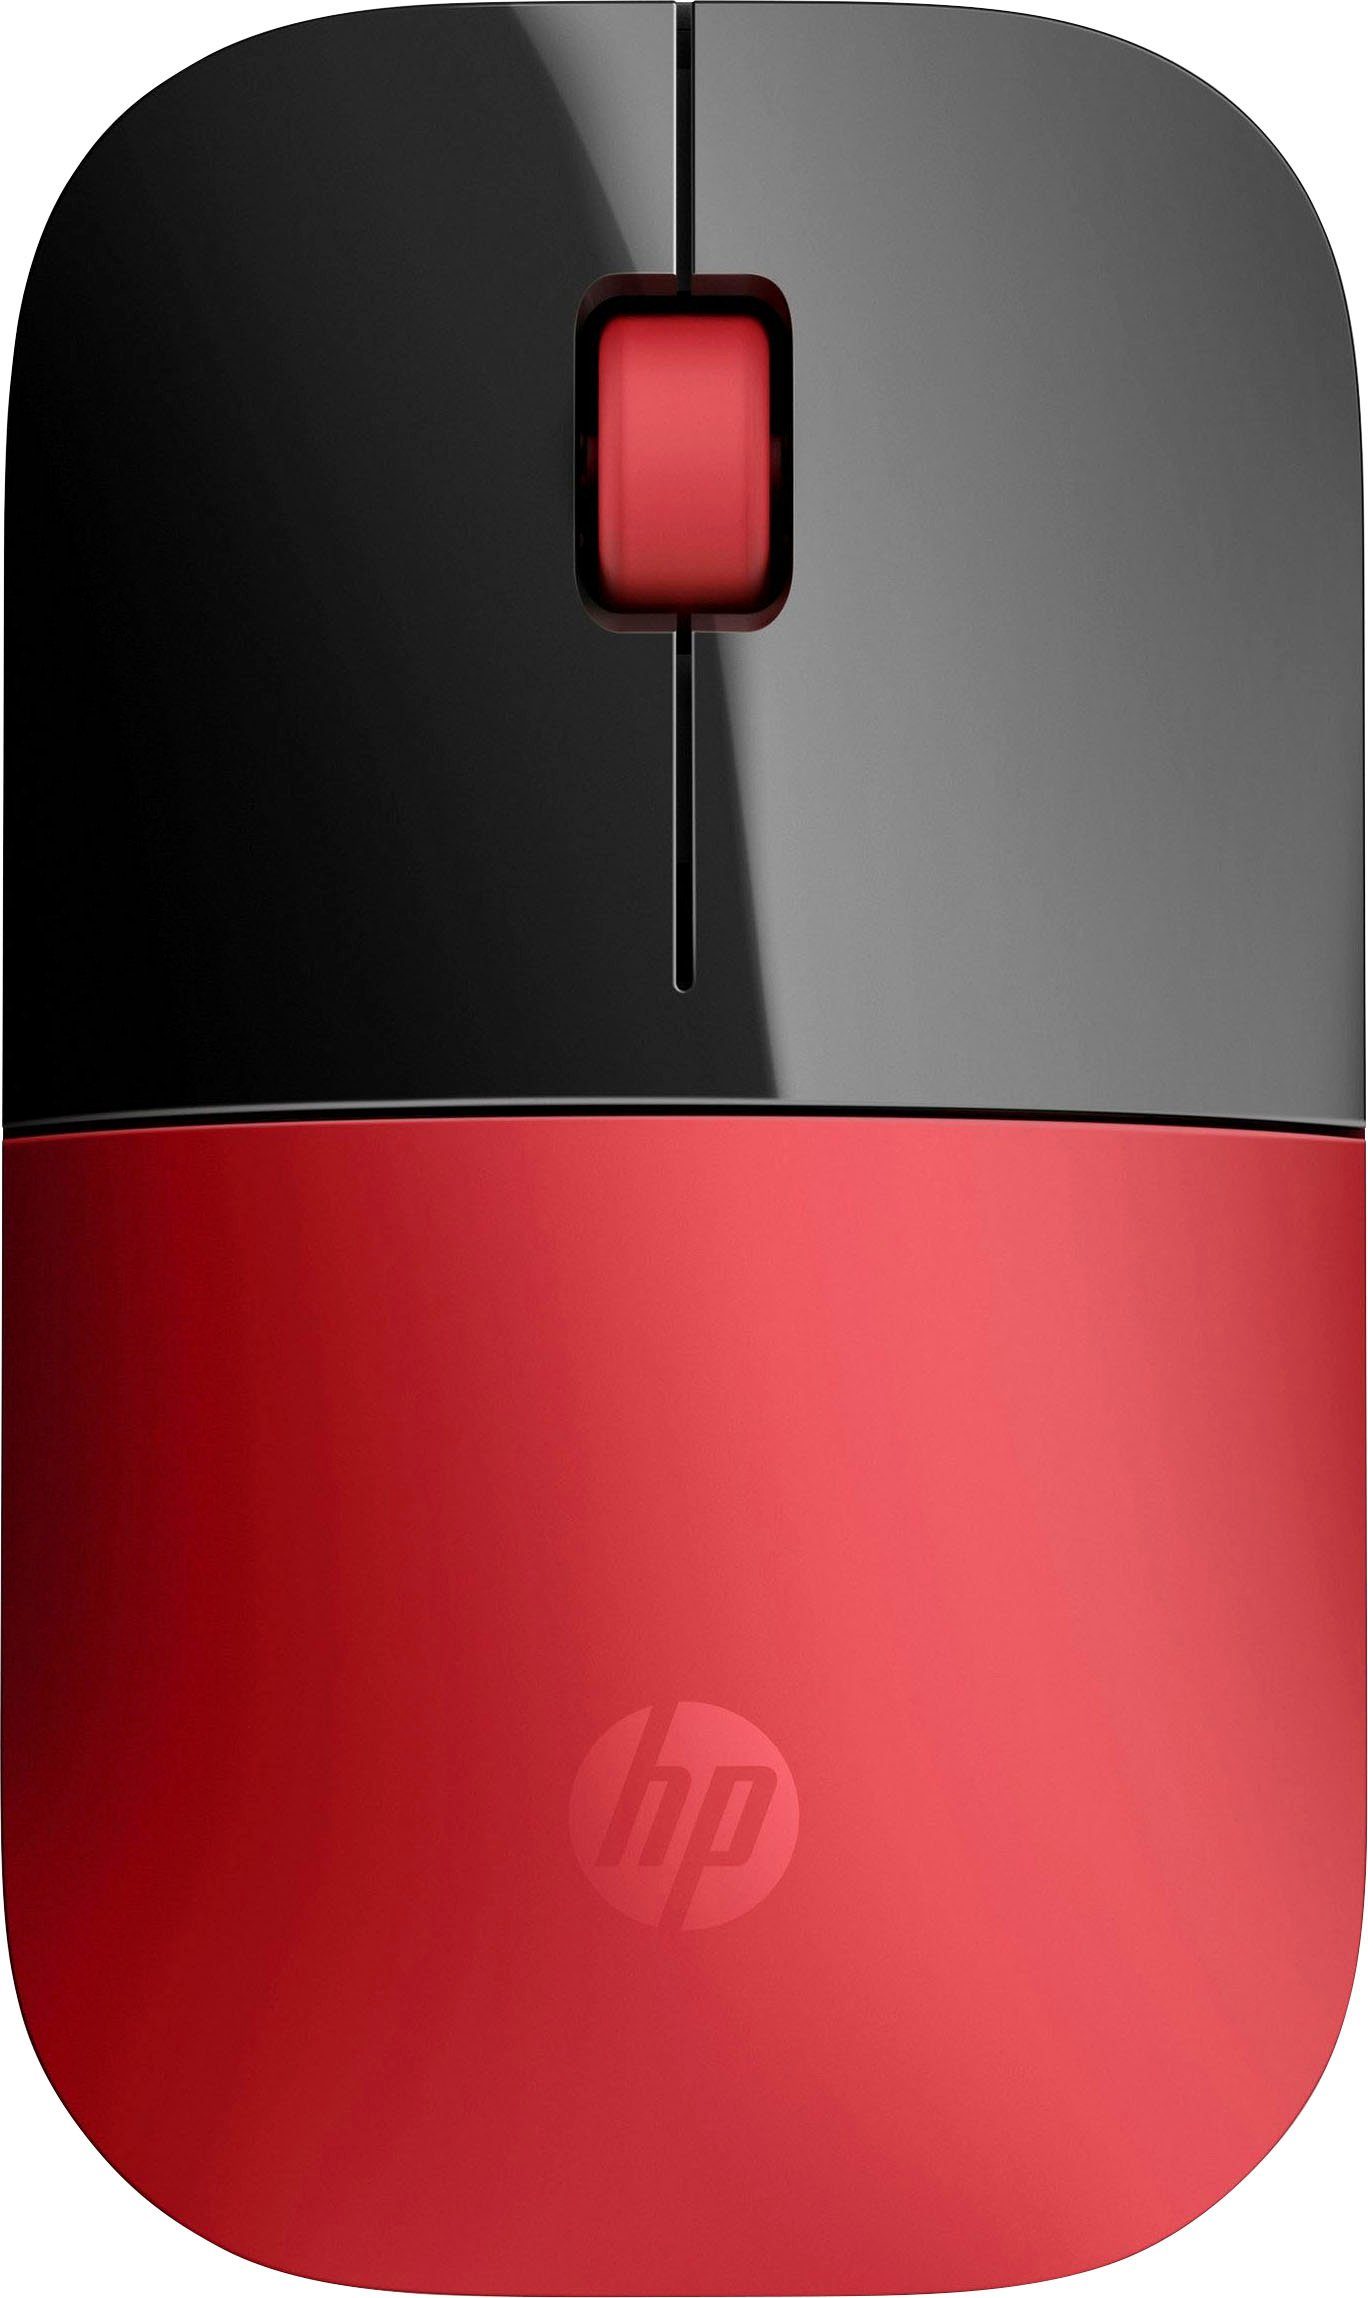 Z3700 HP Maus schwarz/rot